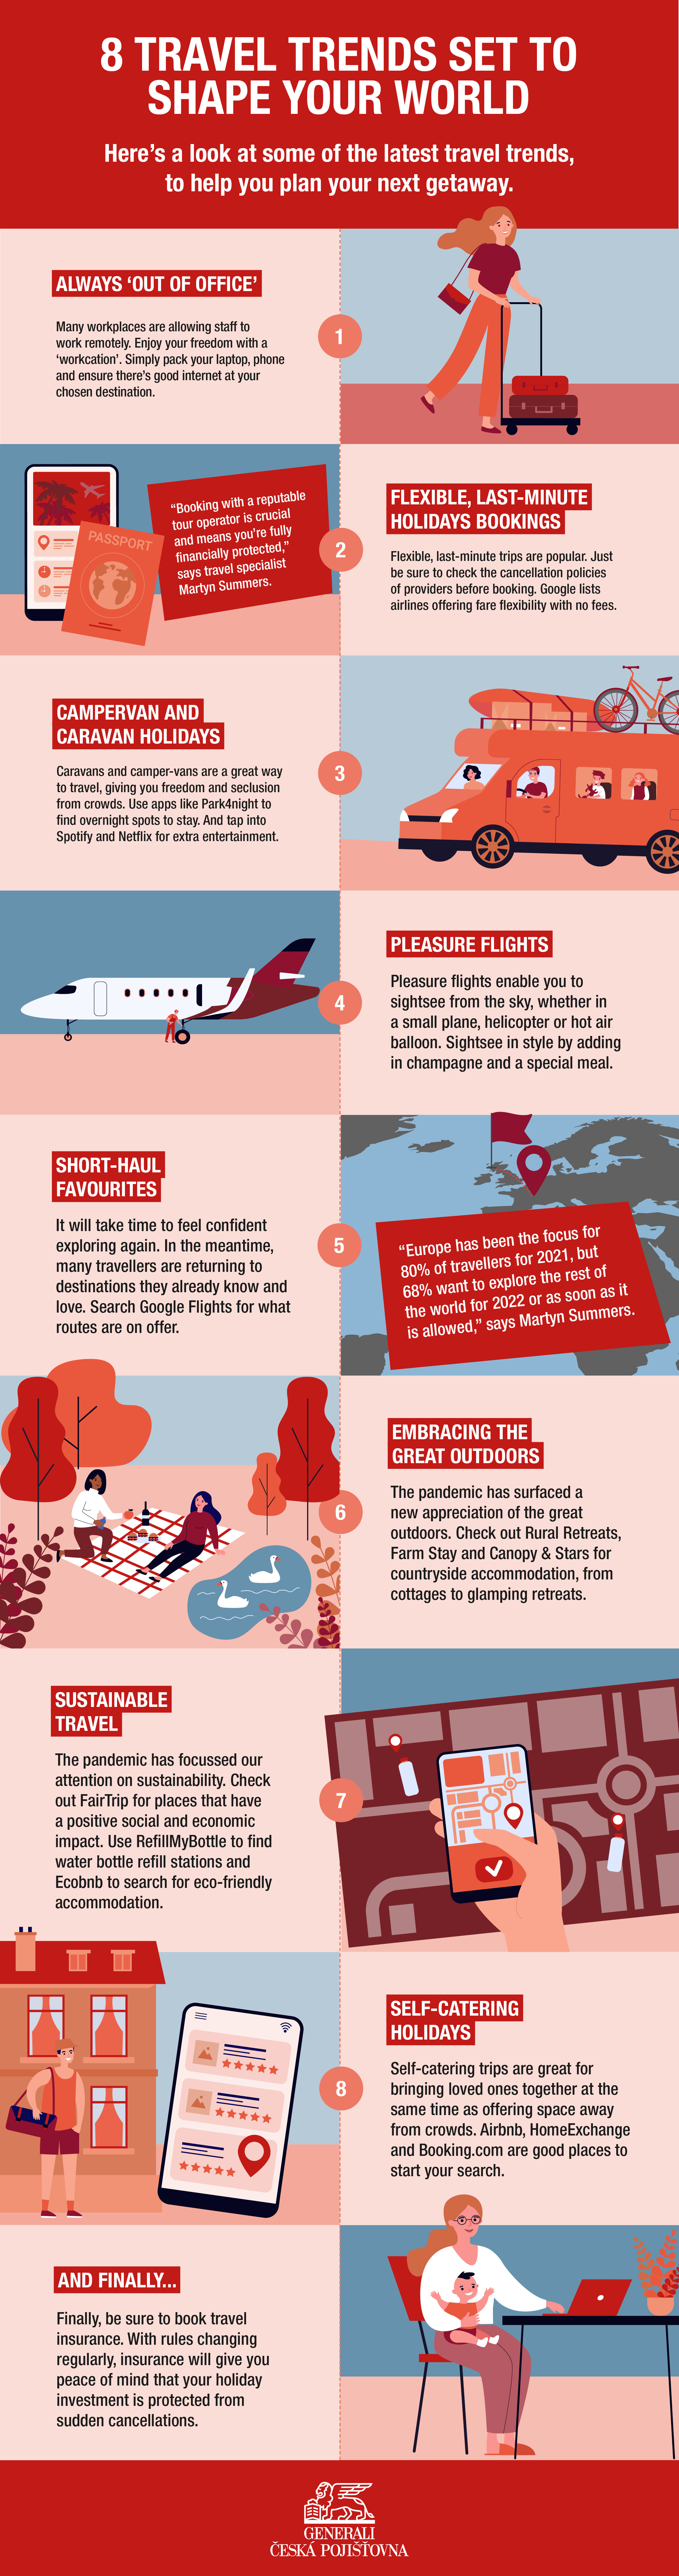 Generali_Travel Trends_Infographic_02.09.21.jpg